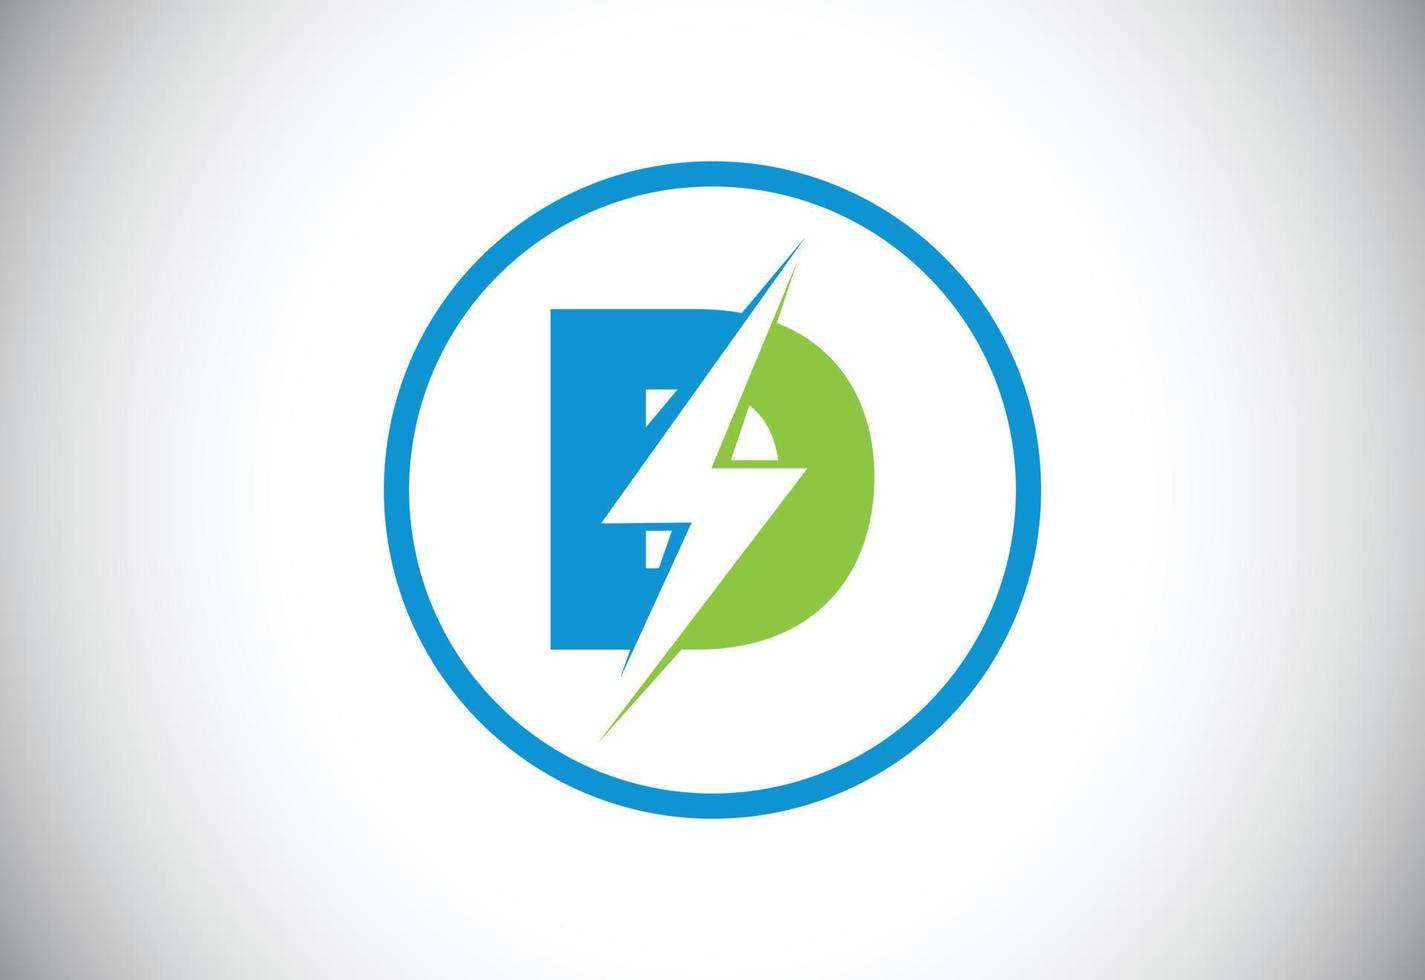 eerste d brief logo ontwerp met verlichting donder bout. elektrisch bout brief logo vector